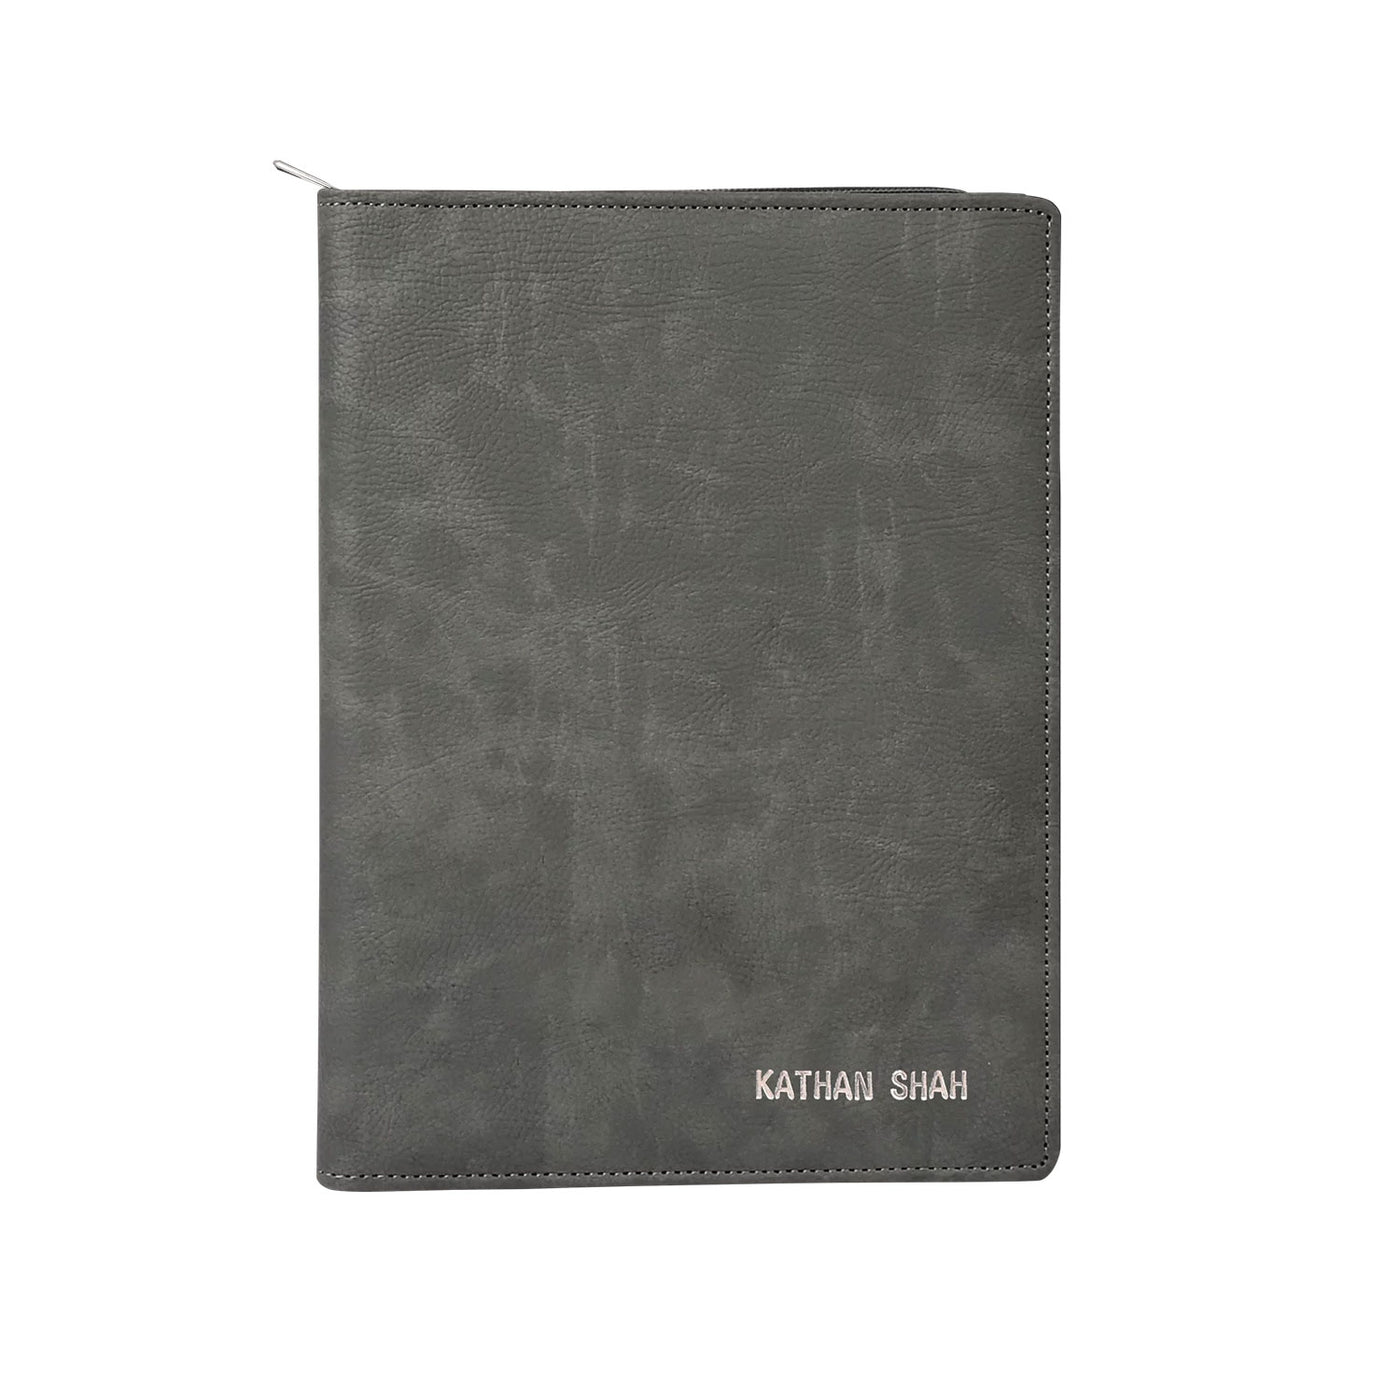 Scholar Vivant Folder Grey Notebook - A5 Ruled 2